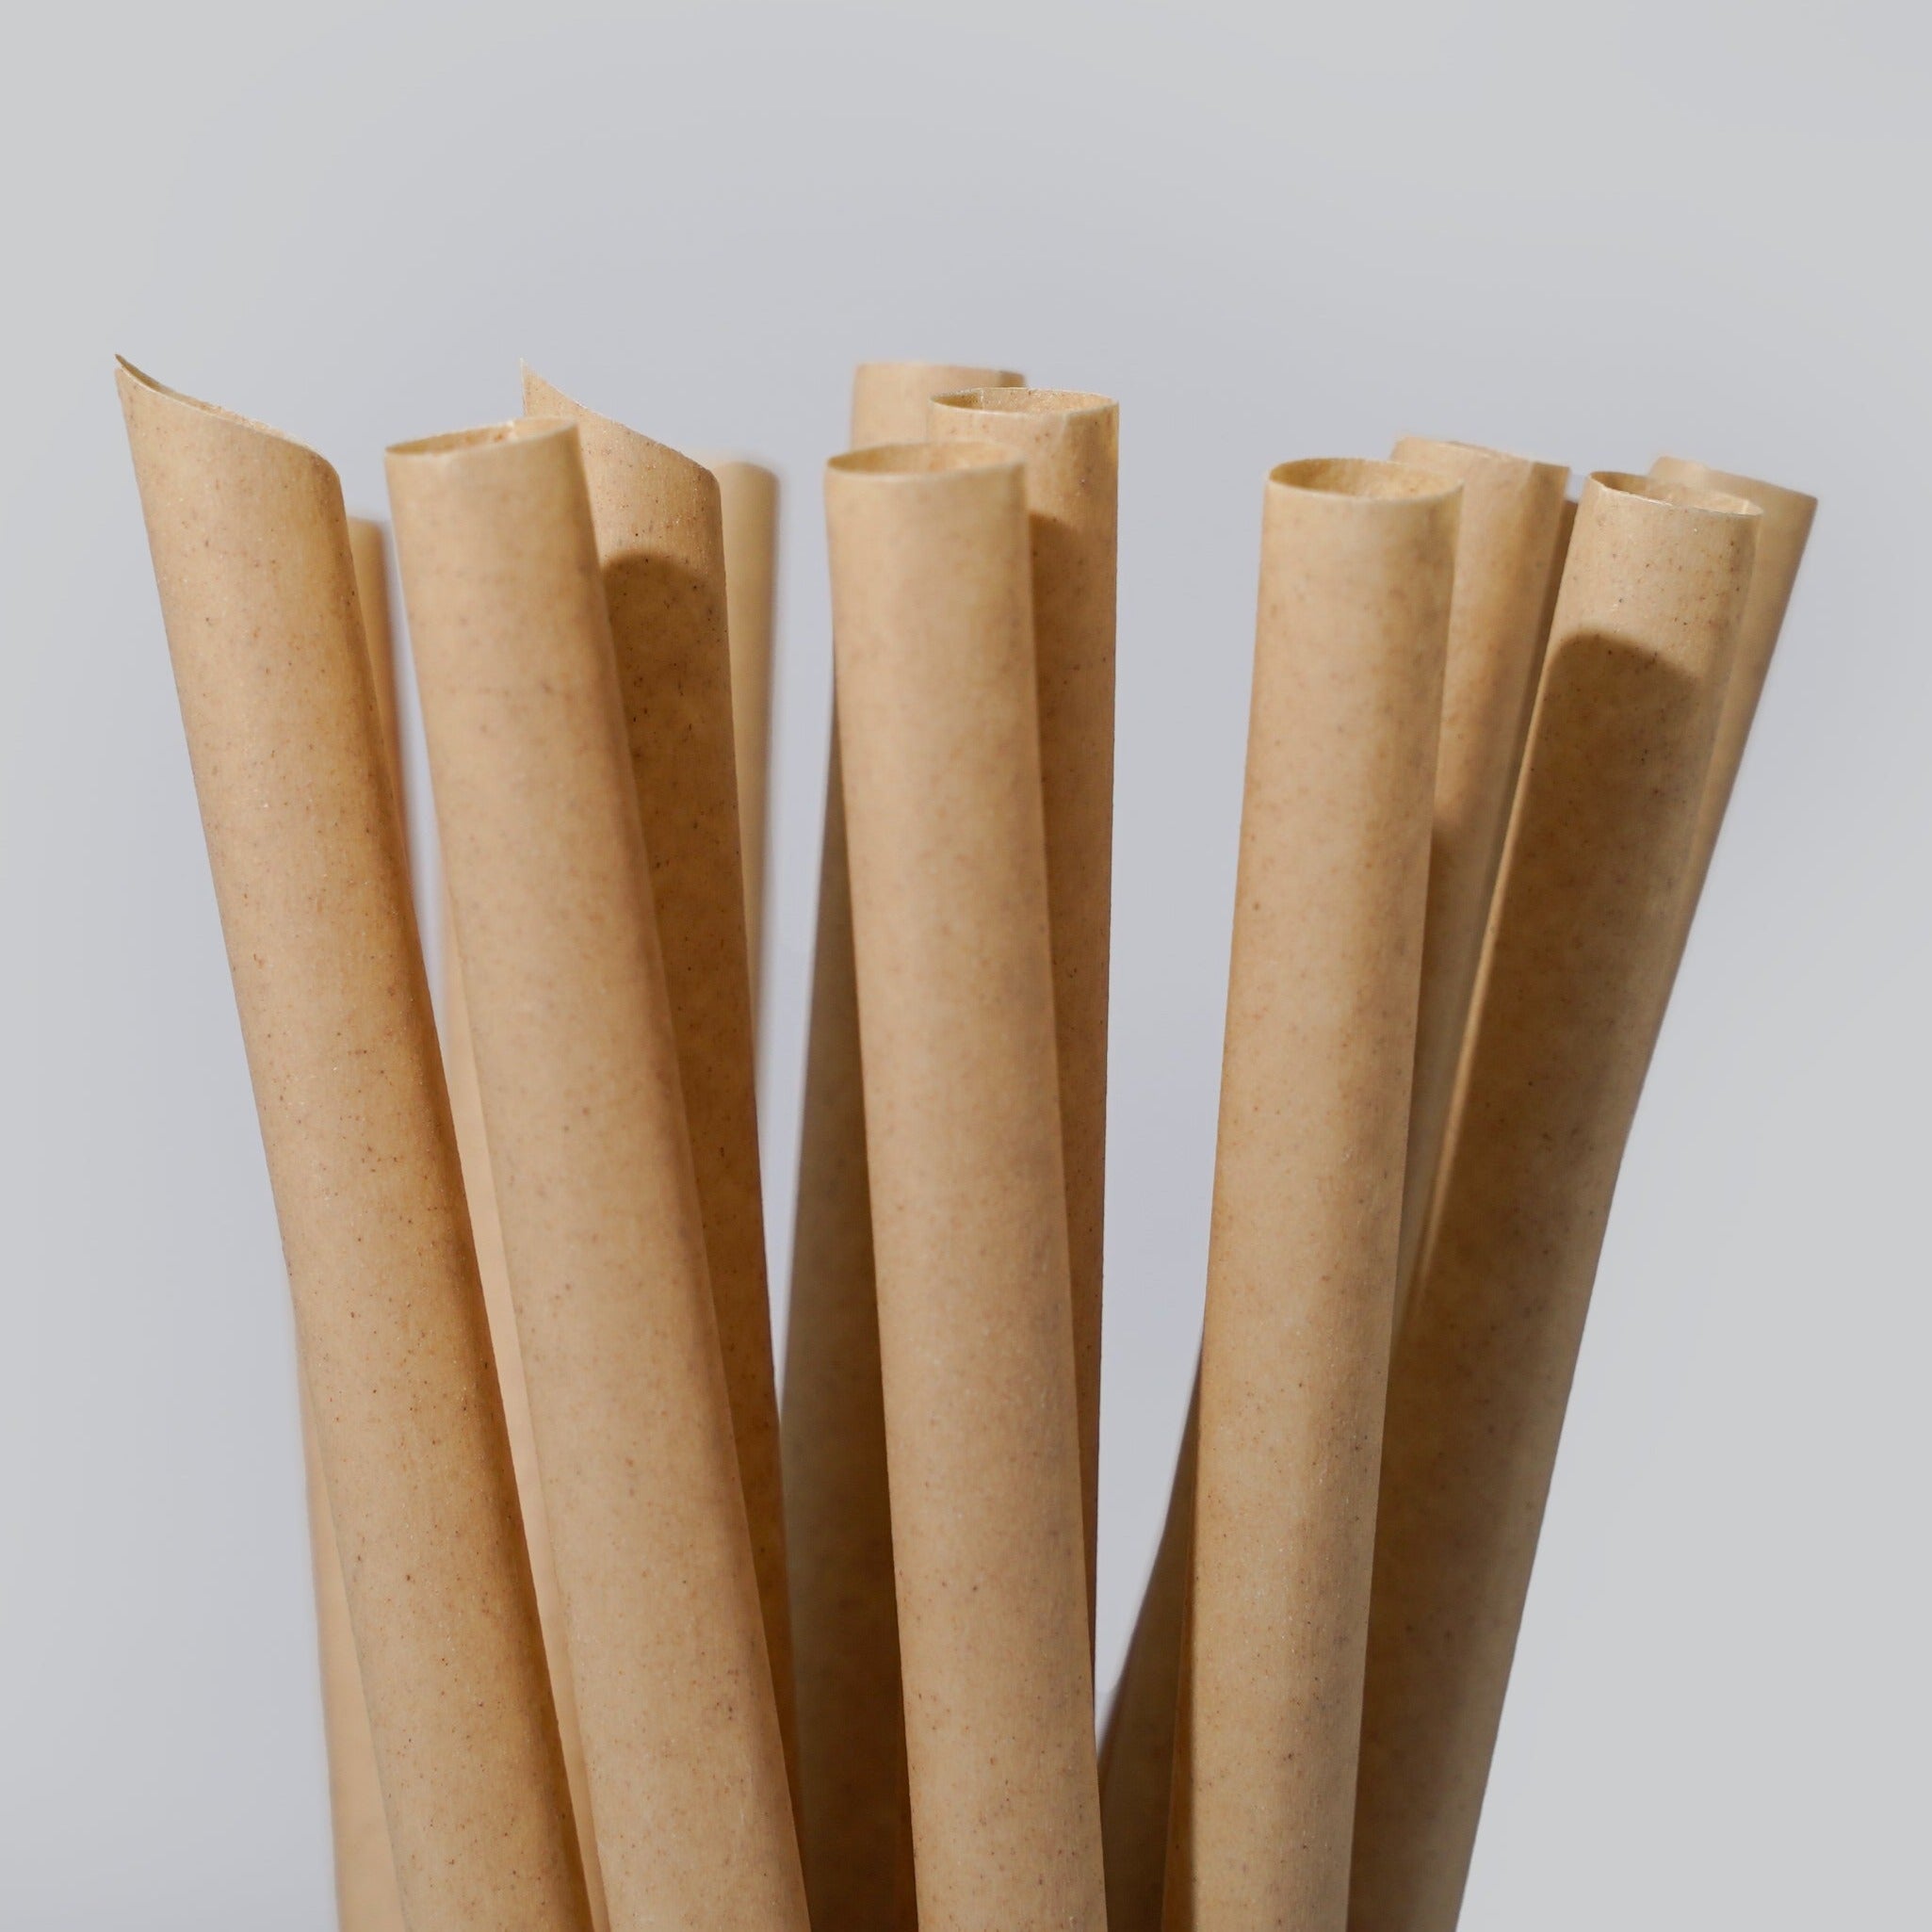 Sugarcane Drinking Straws (Wholesale/Bulk), BOBA/Bubble Tea Size - 1000 count by EQUO